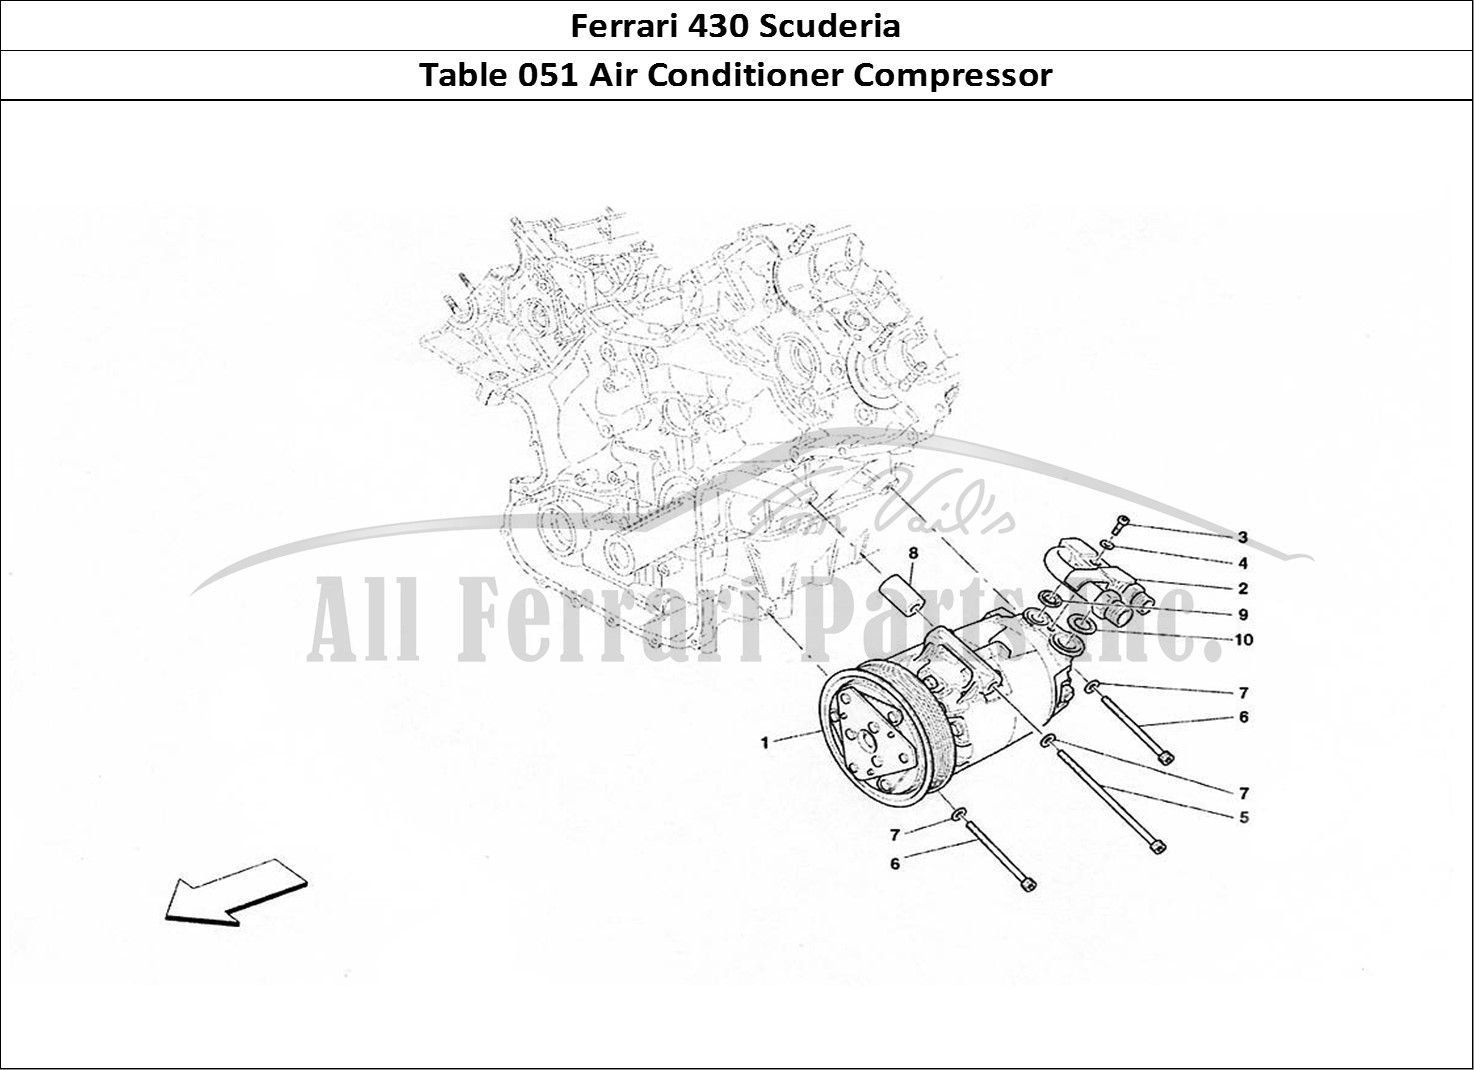 Ferrari Parts Ferrari 430 Scuderia Page 051 Air Conditioning Compress